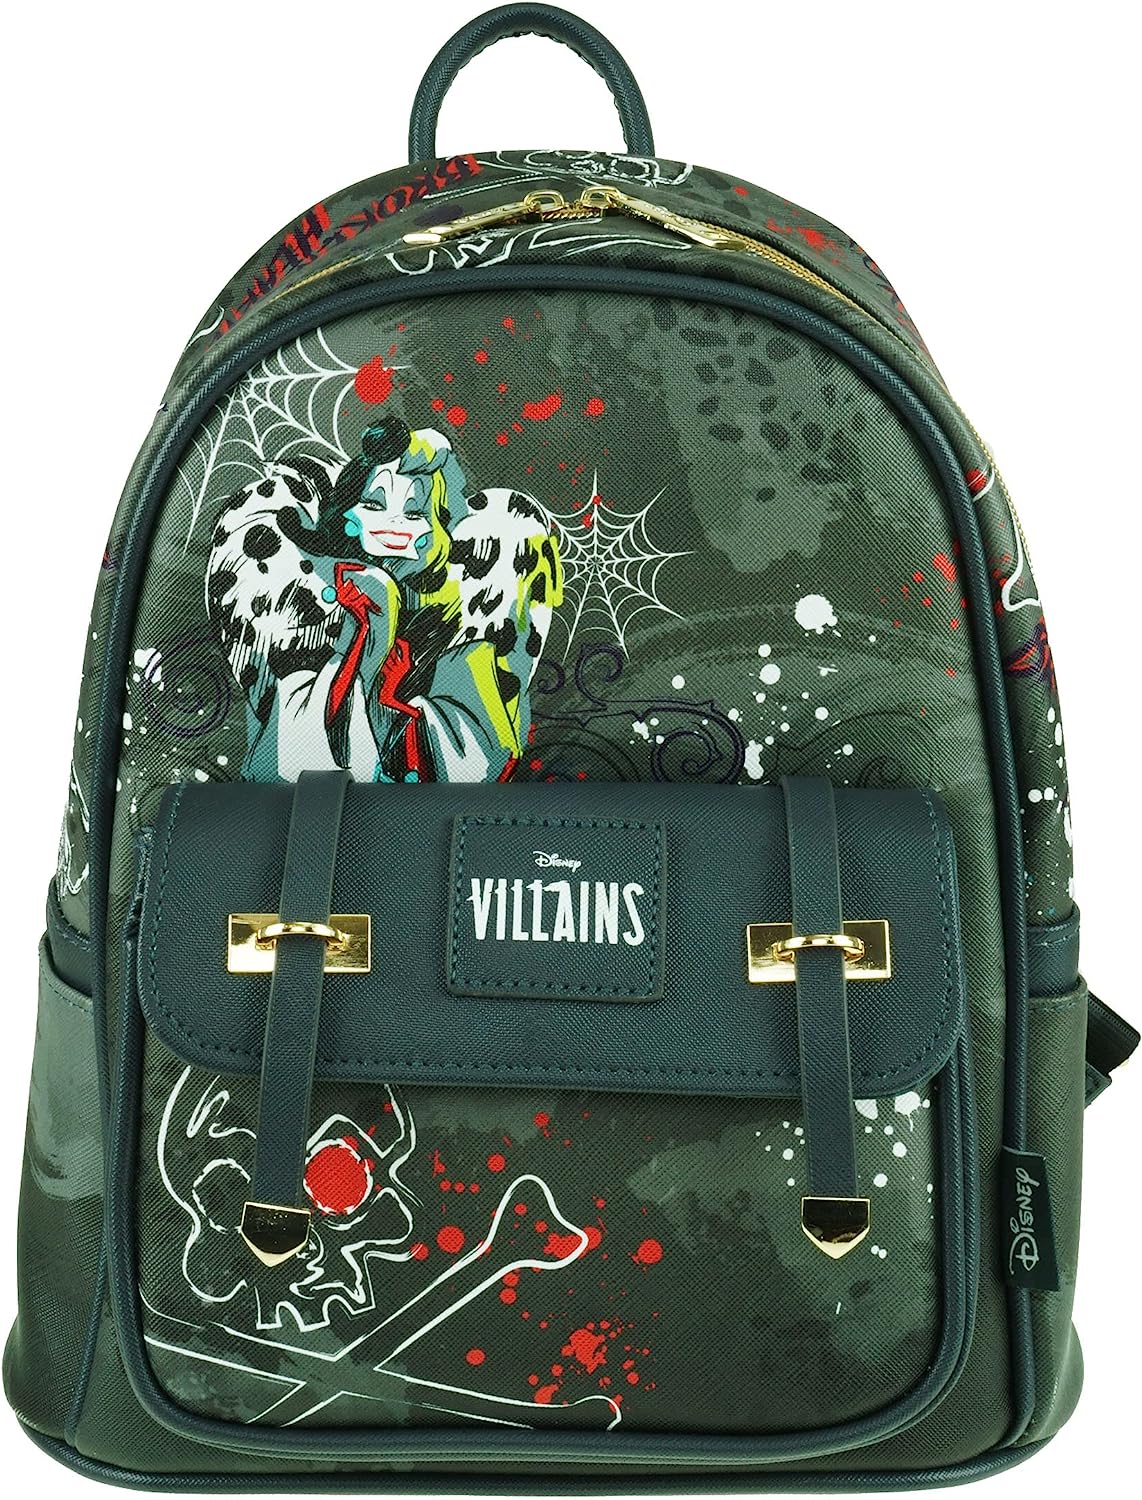 KBNL Villains - Cruella DeVil 11inch Vegan Leather Mini Backpack - A21820, Multicoloured, Medium